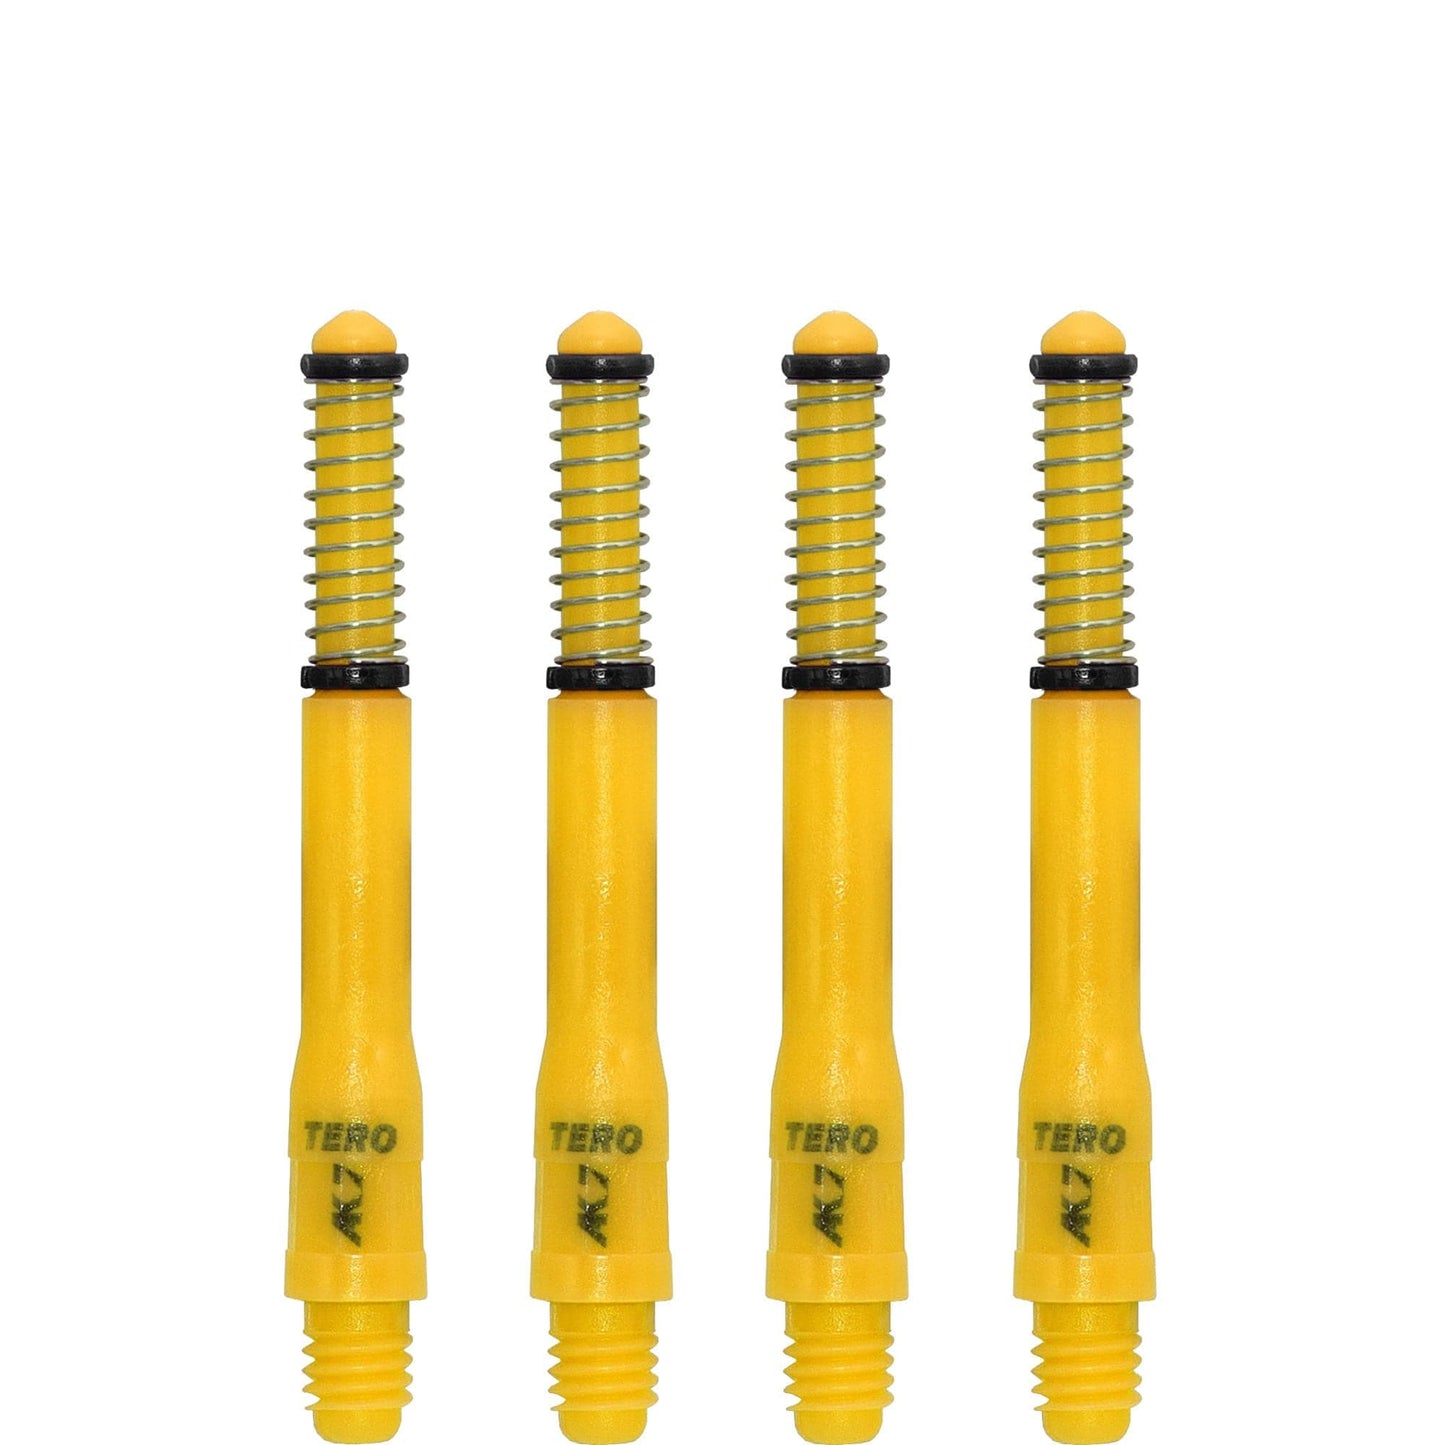 Cuesoul - Dart Shafts - Tero Flight System - AK7 - Standard - Set of 4 - Yellow Cuesoul 40mm